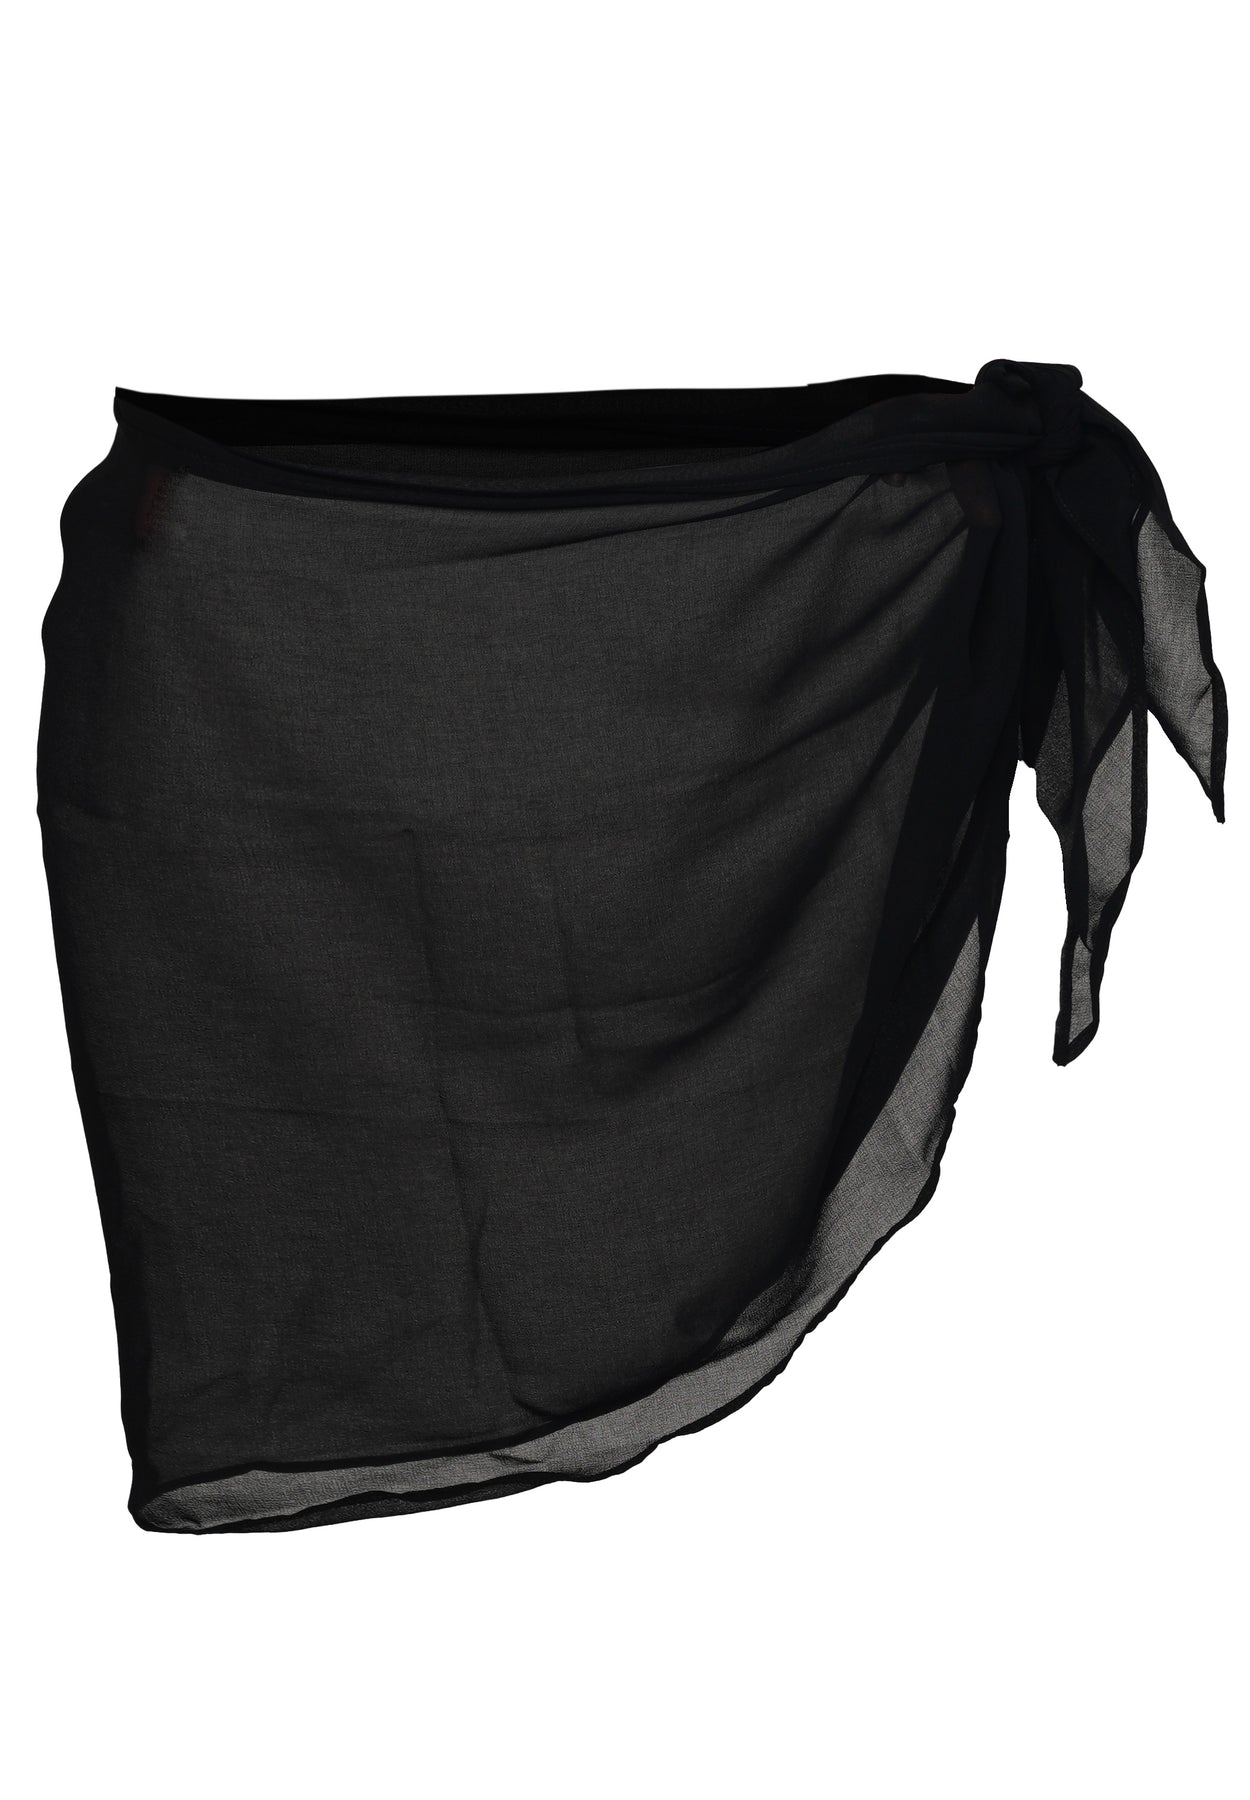 ELLA sarong black - La Michaux beachwear